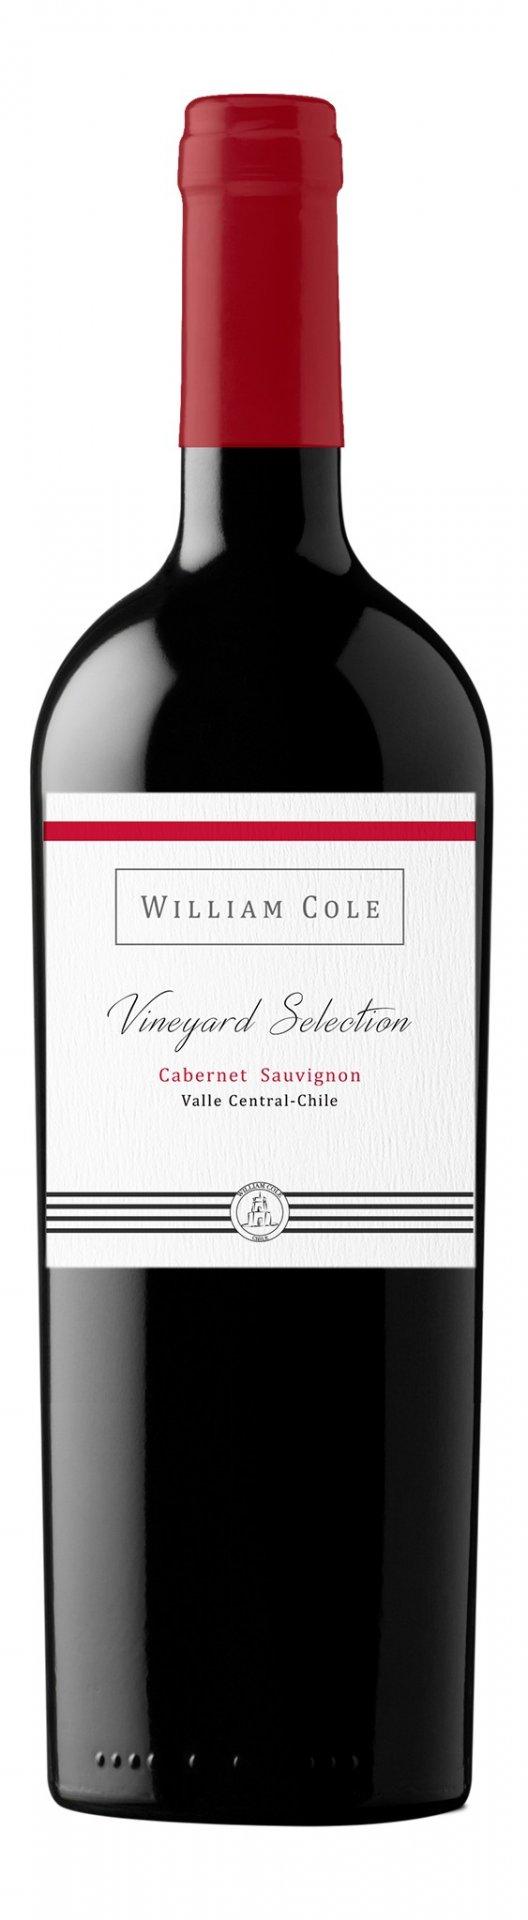 William Cole Vineyard Selection Cabernet